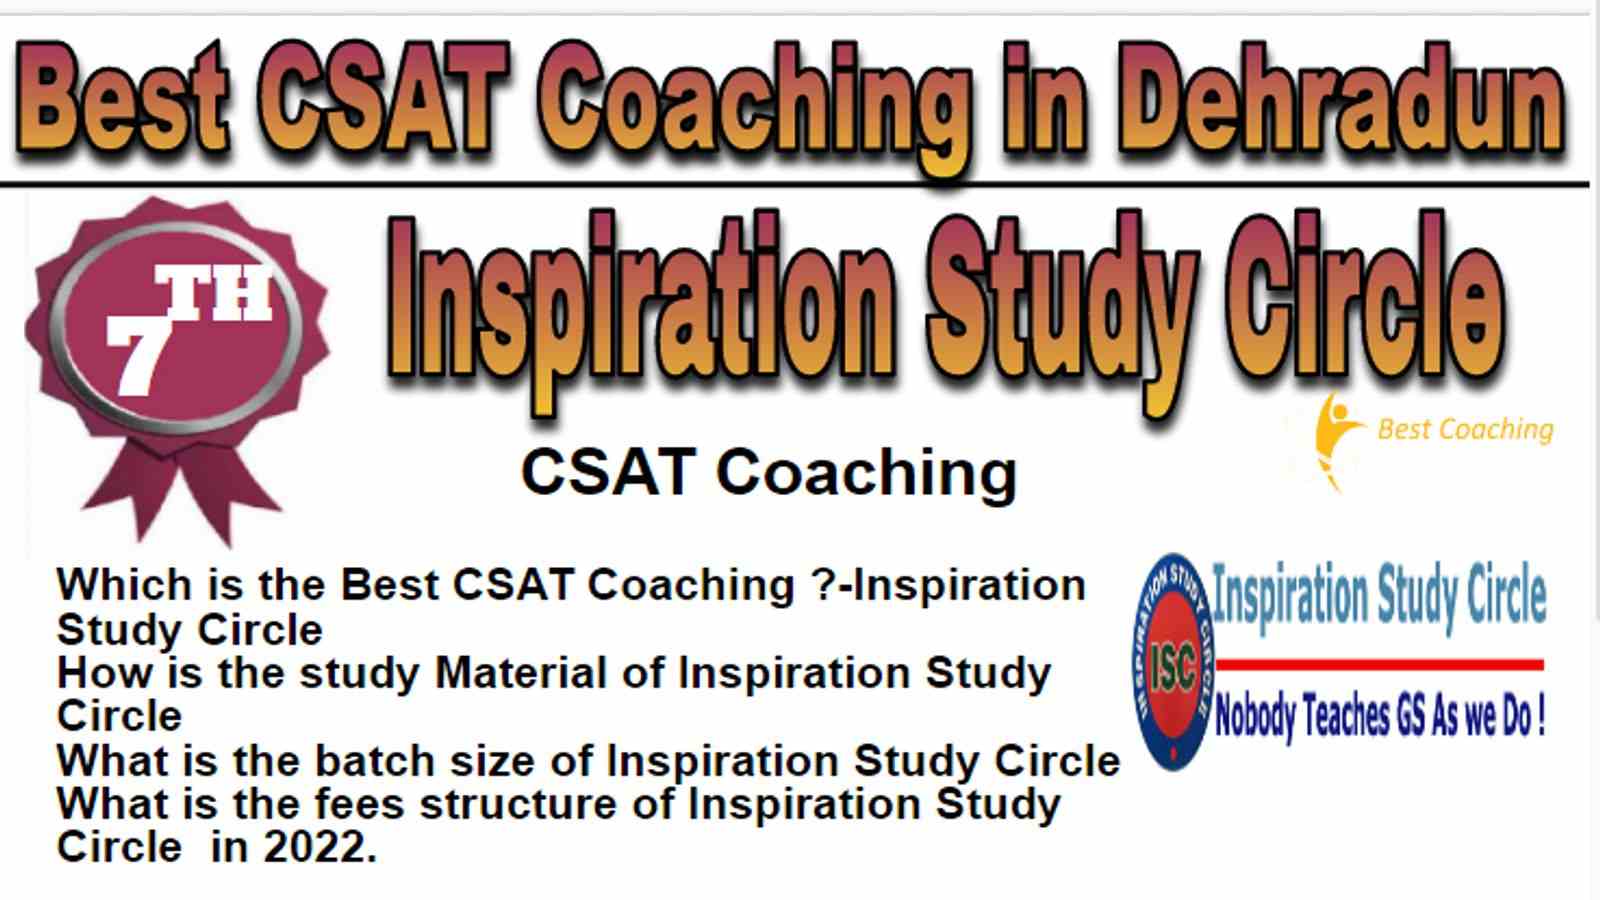 Rank 7 Best CSAT Coaching in Dehradun